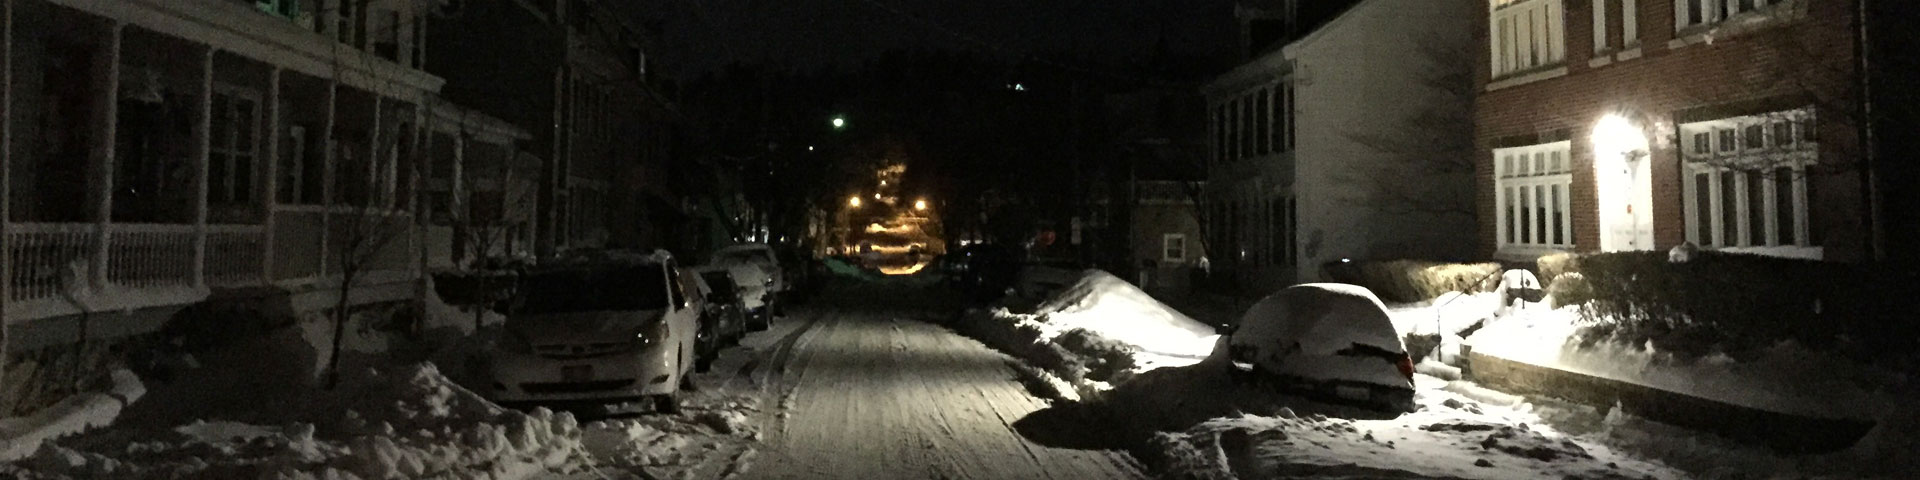 Streetlights illuminate a snowy street.